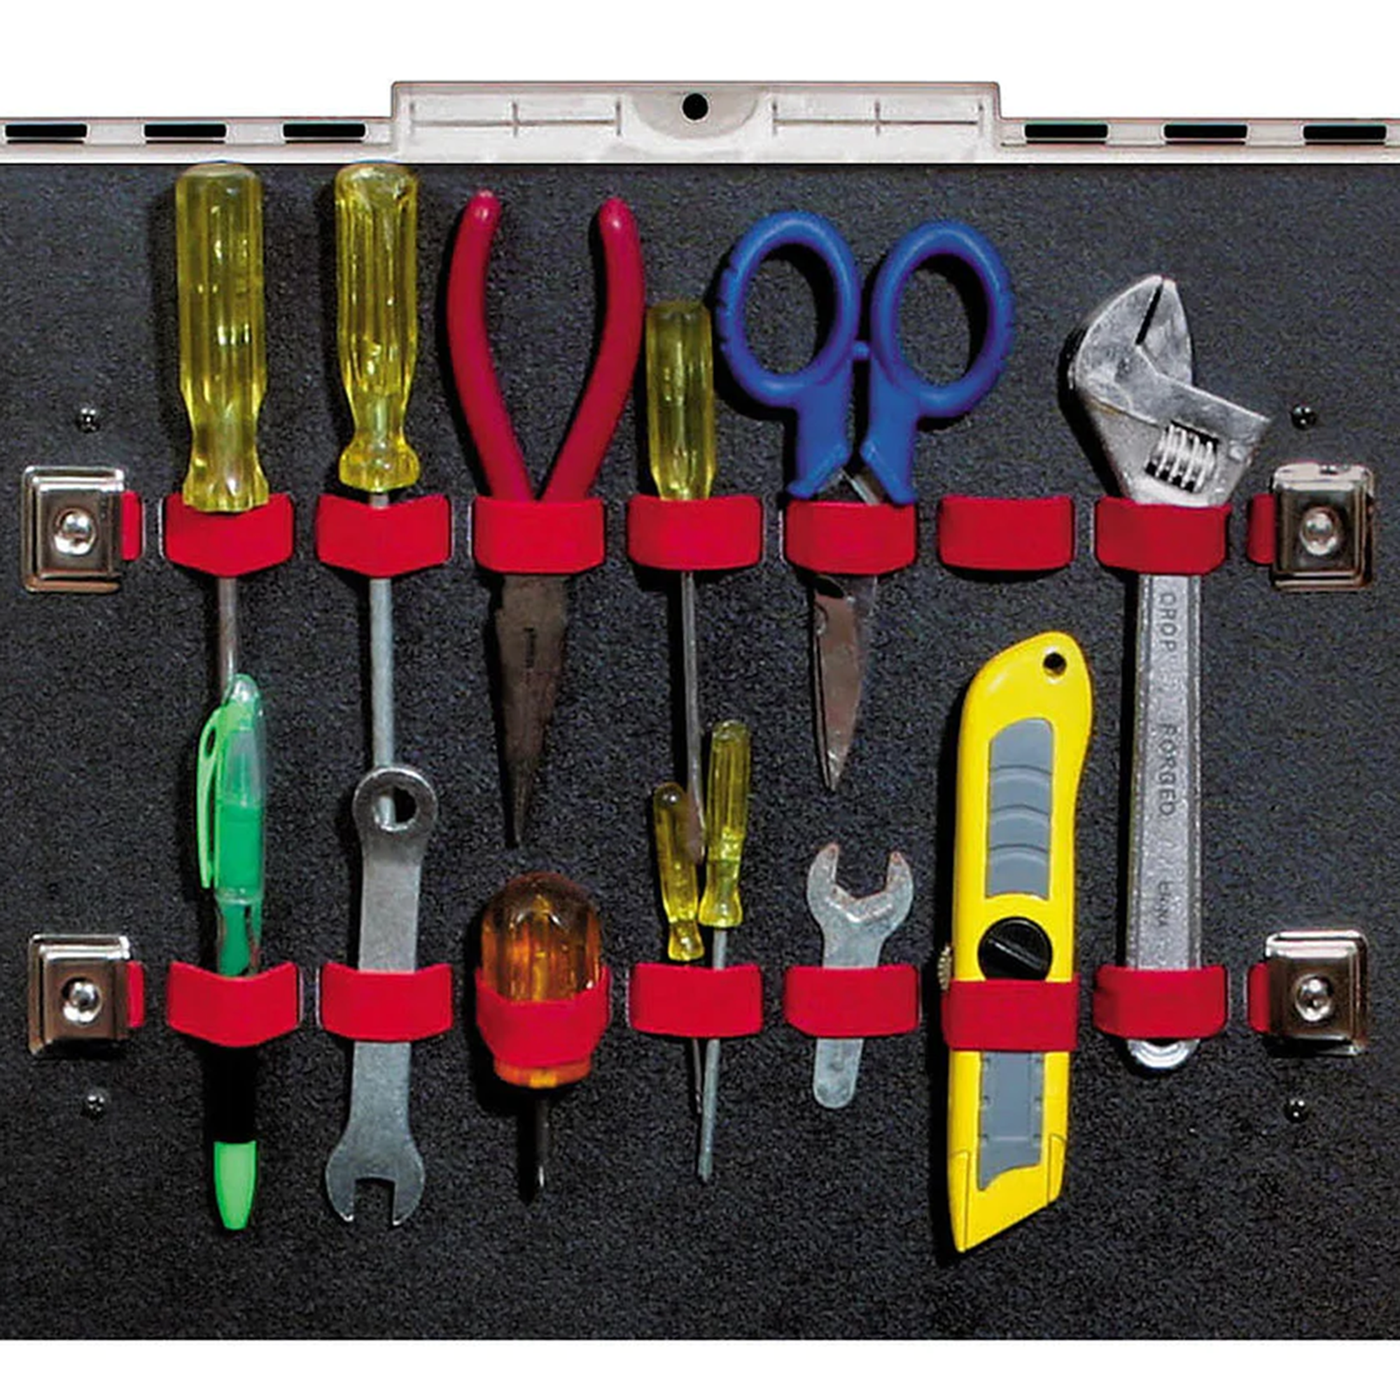 P1- Lid Tool Panel (fits all case lids)